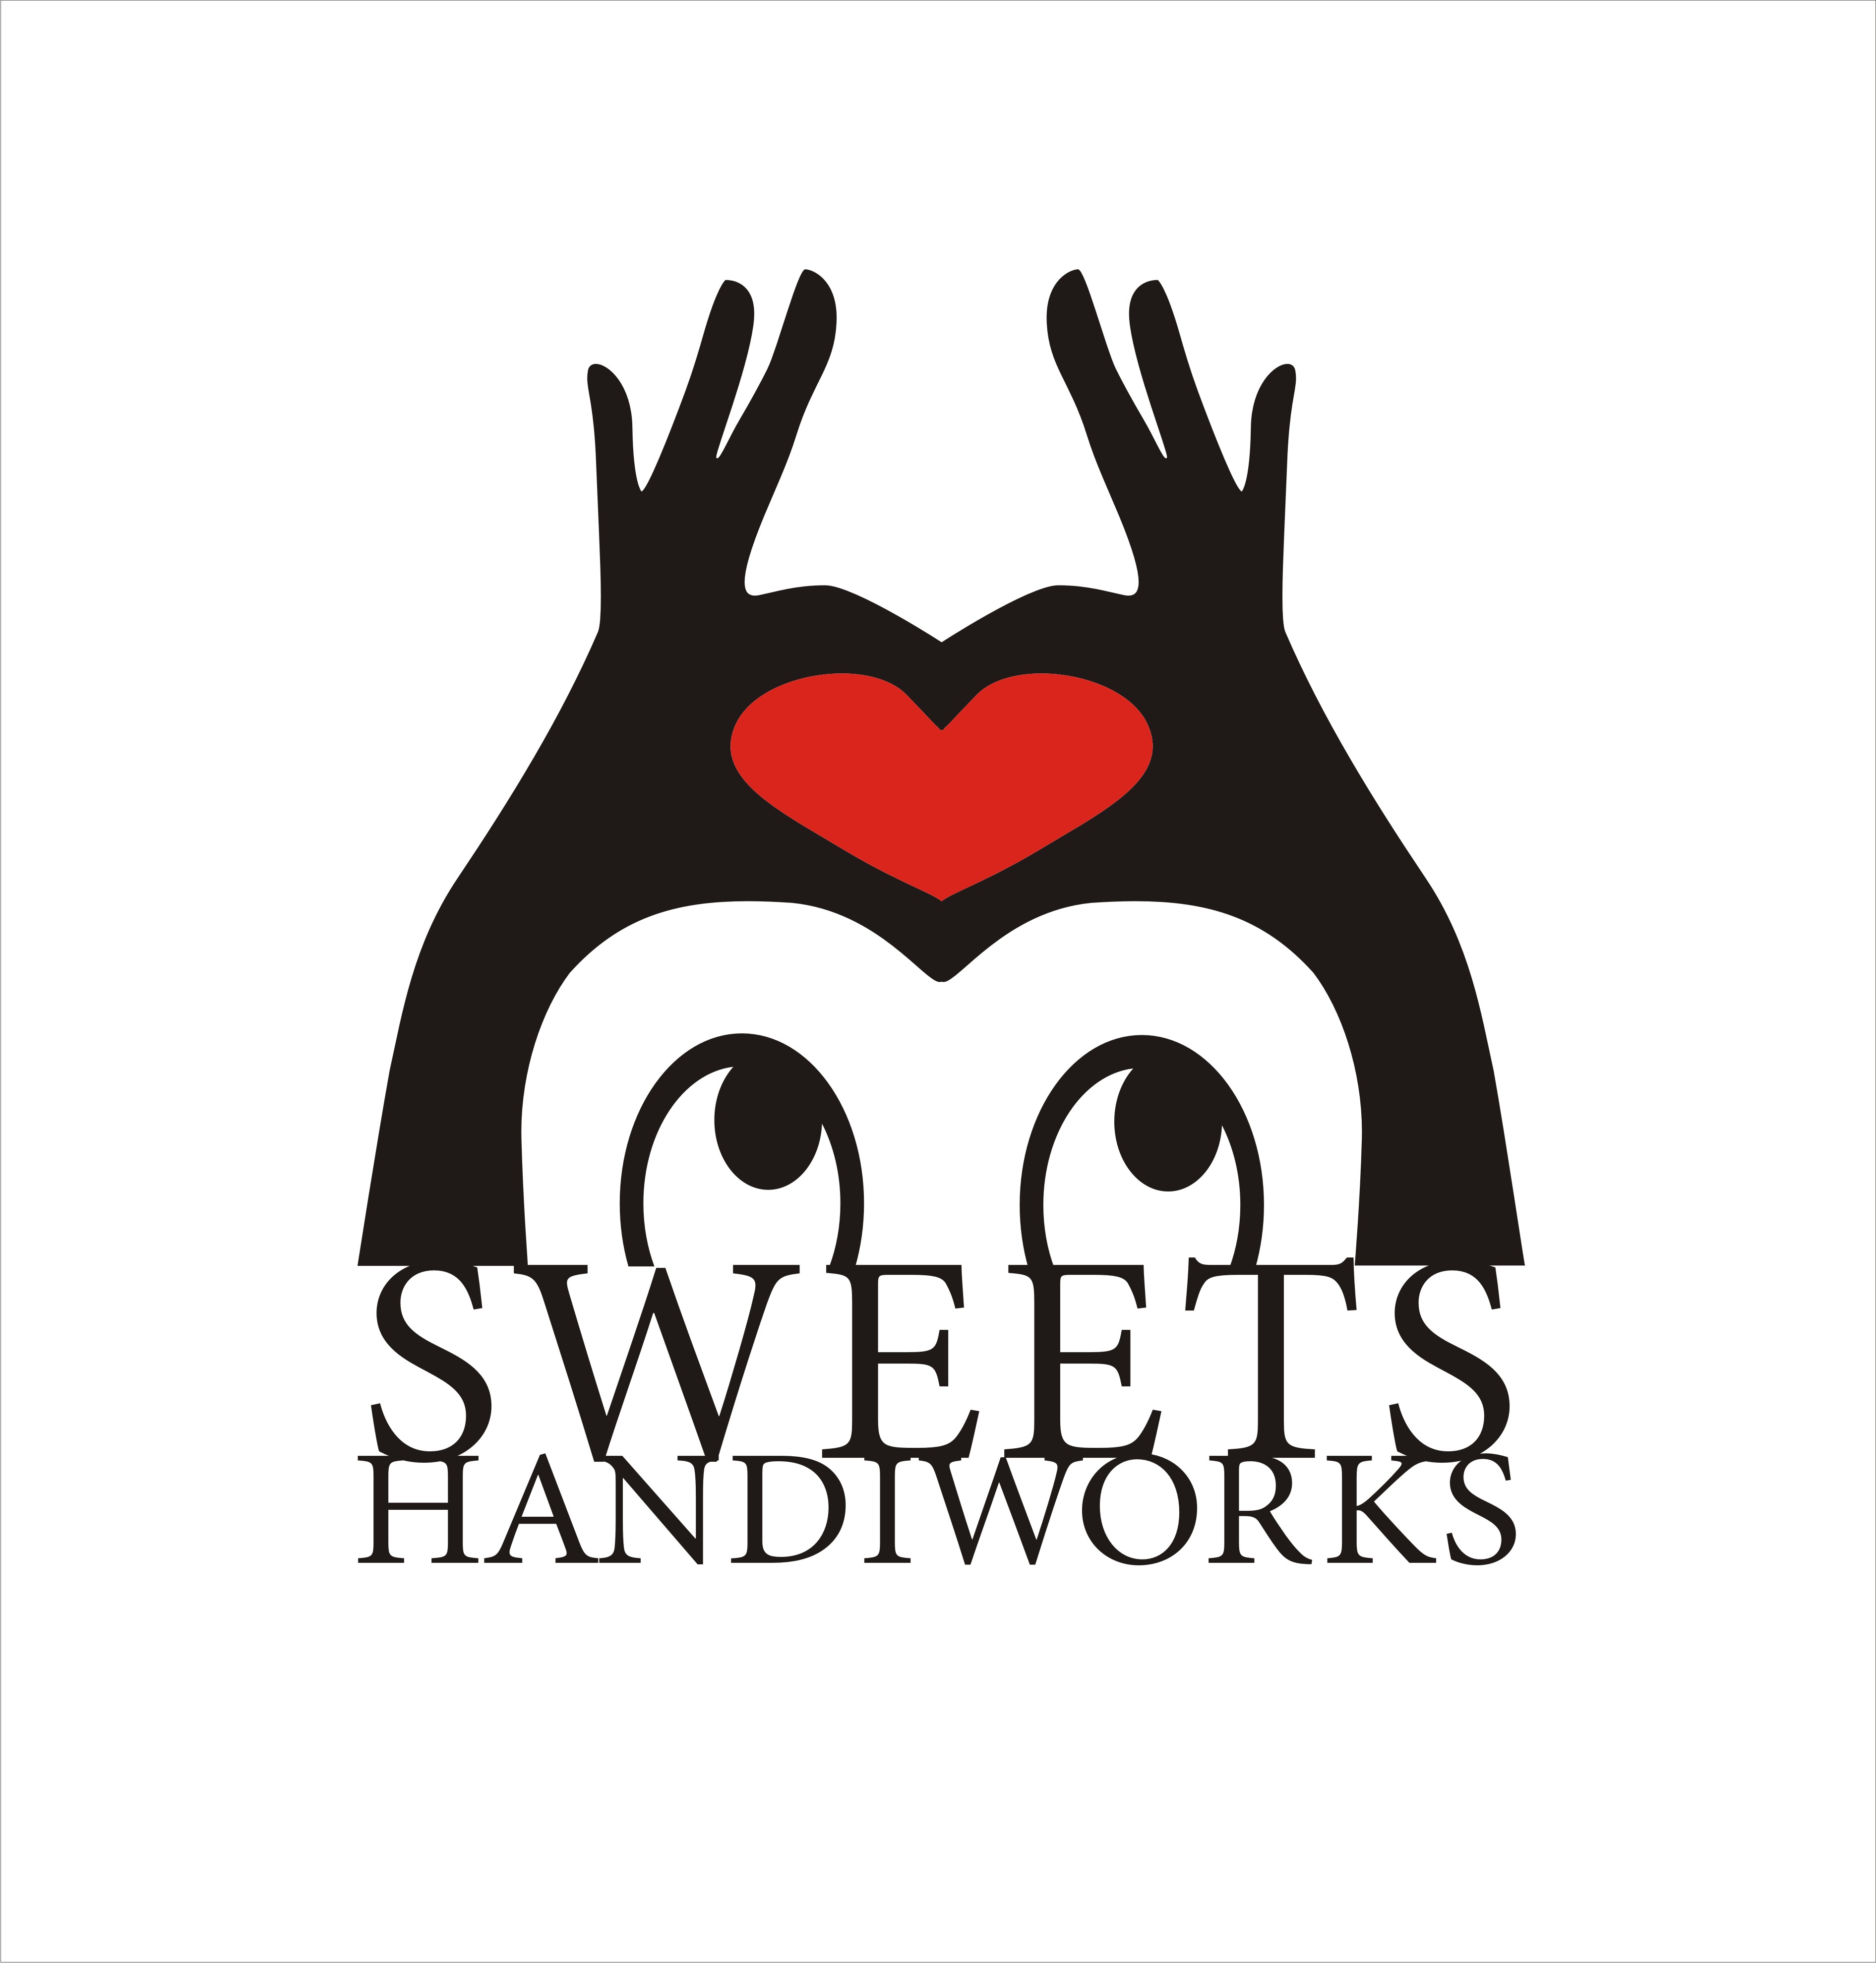 Sweets handuworks logo